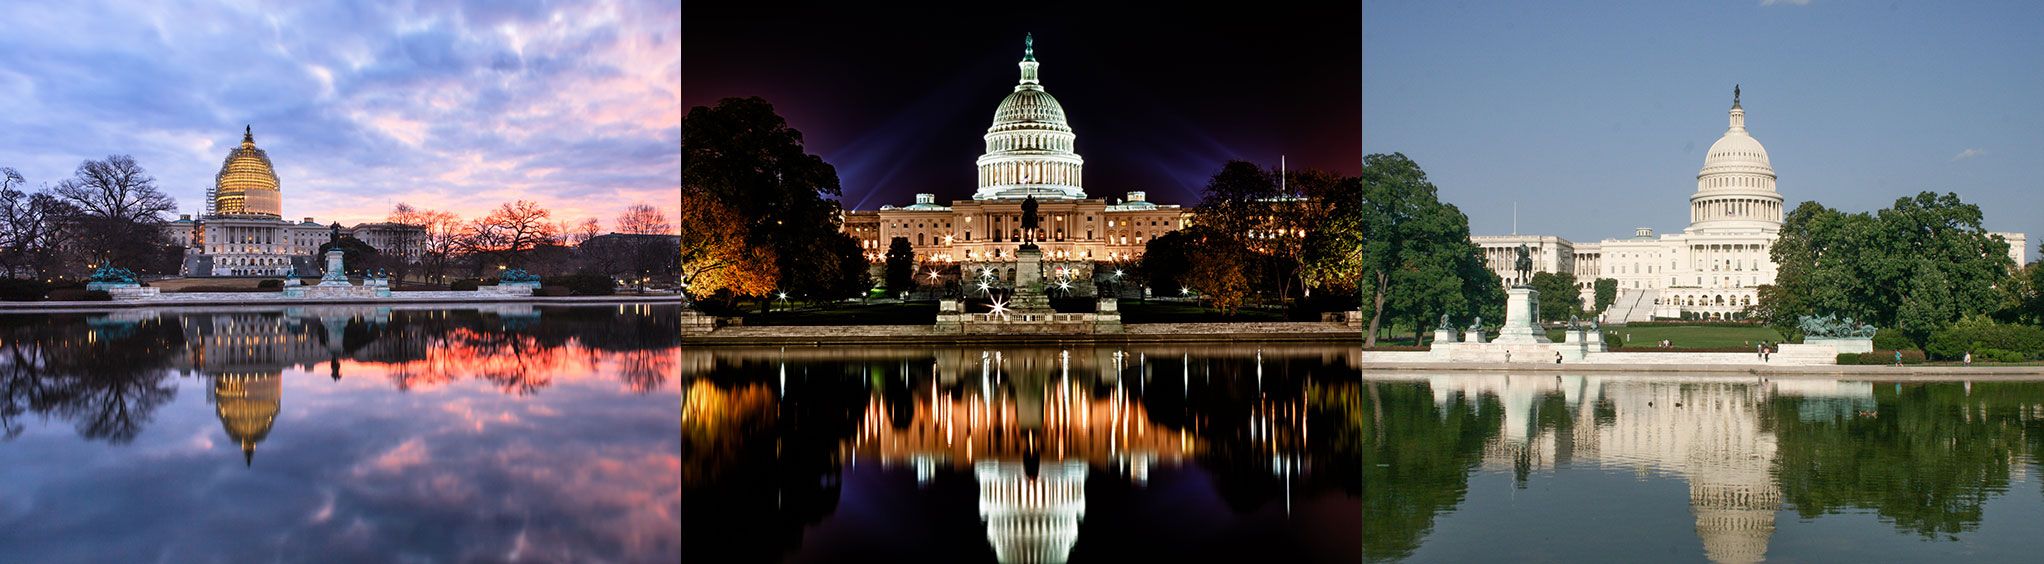 US Capitol Reflecting Pool in Washington DC